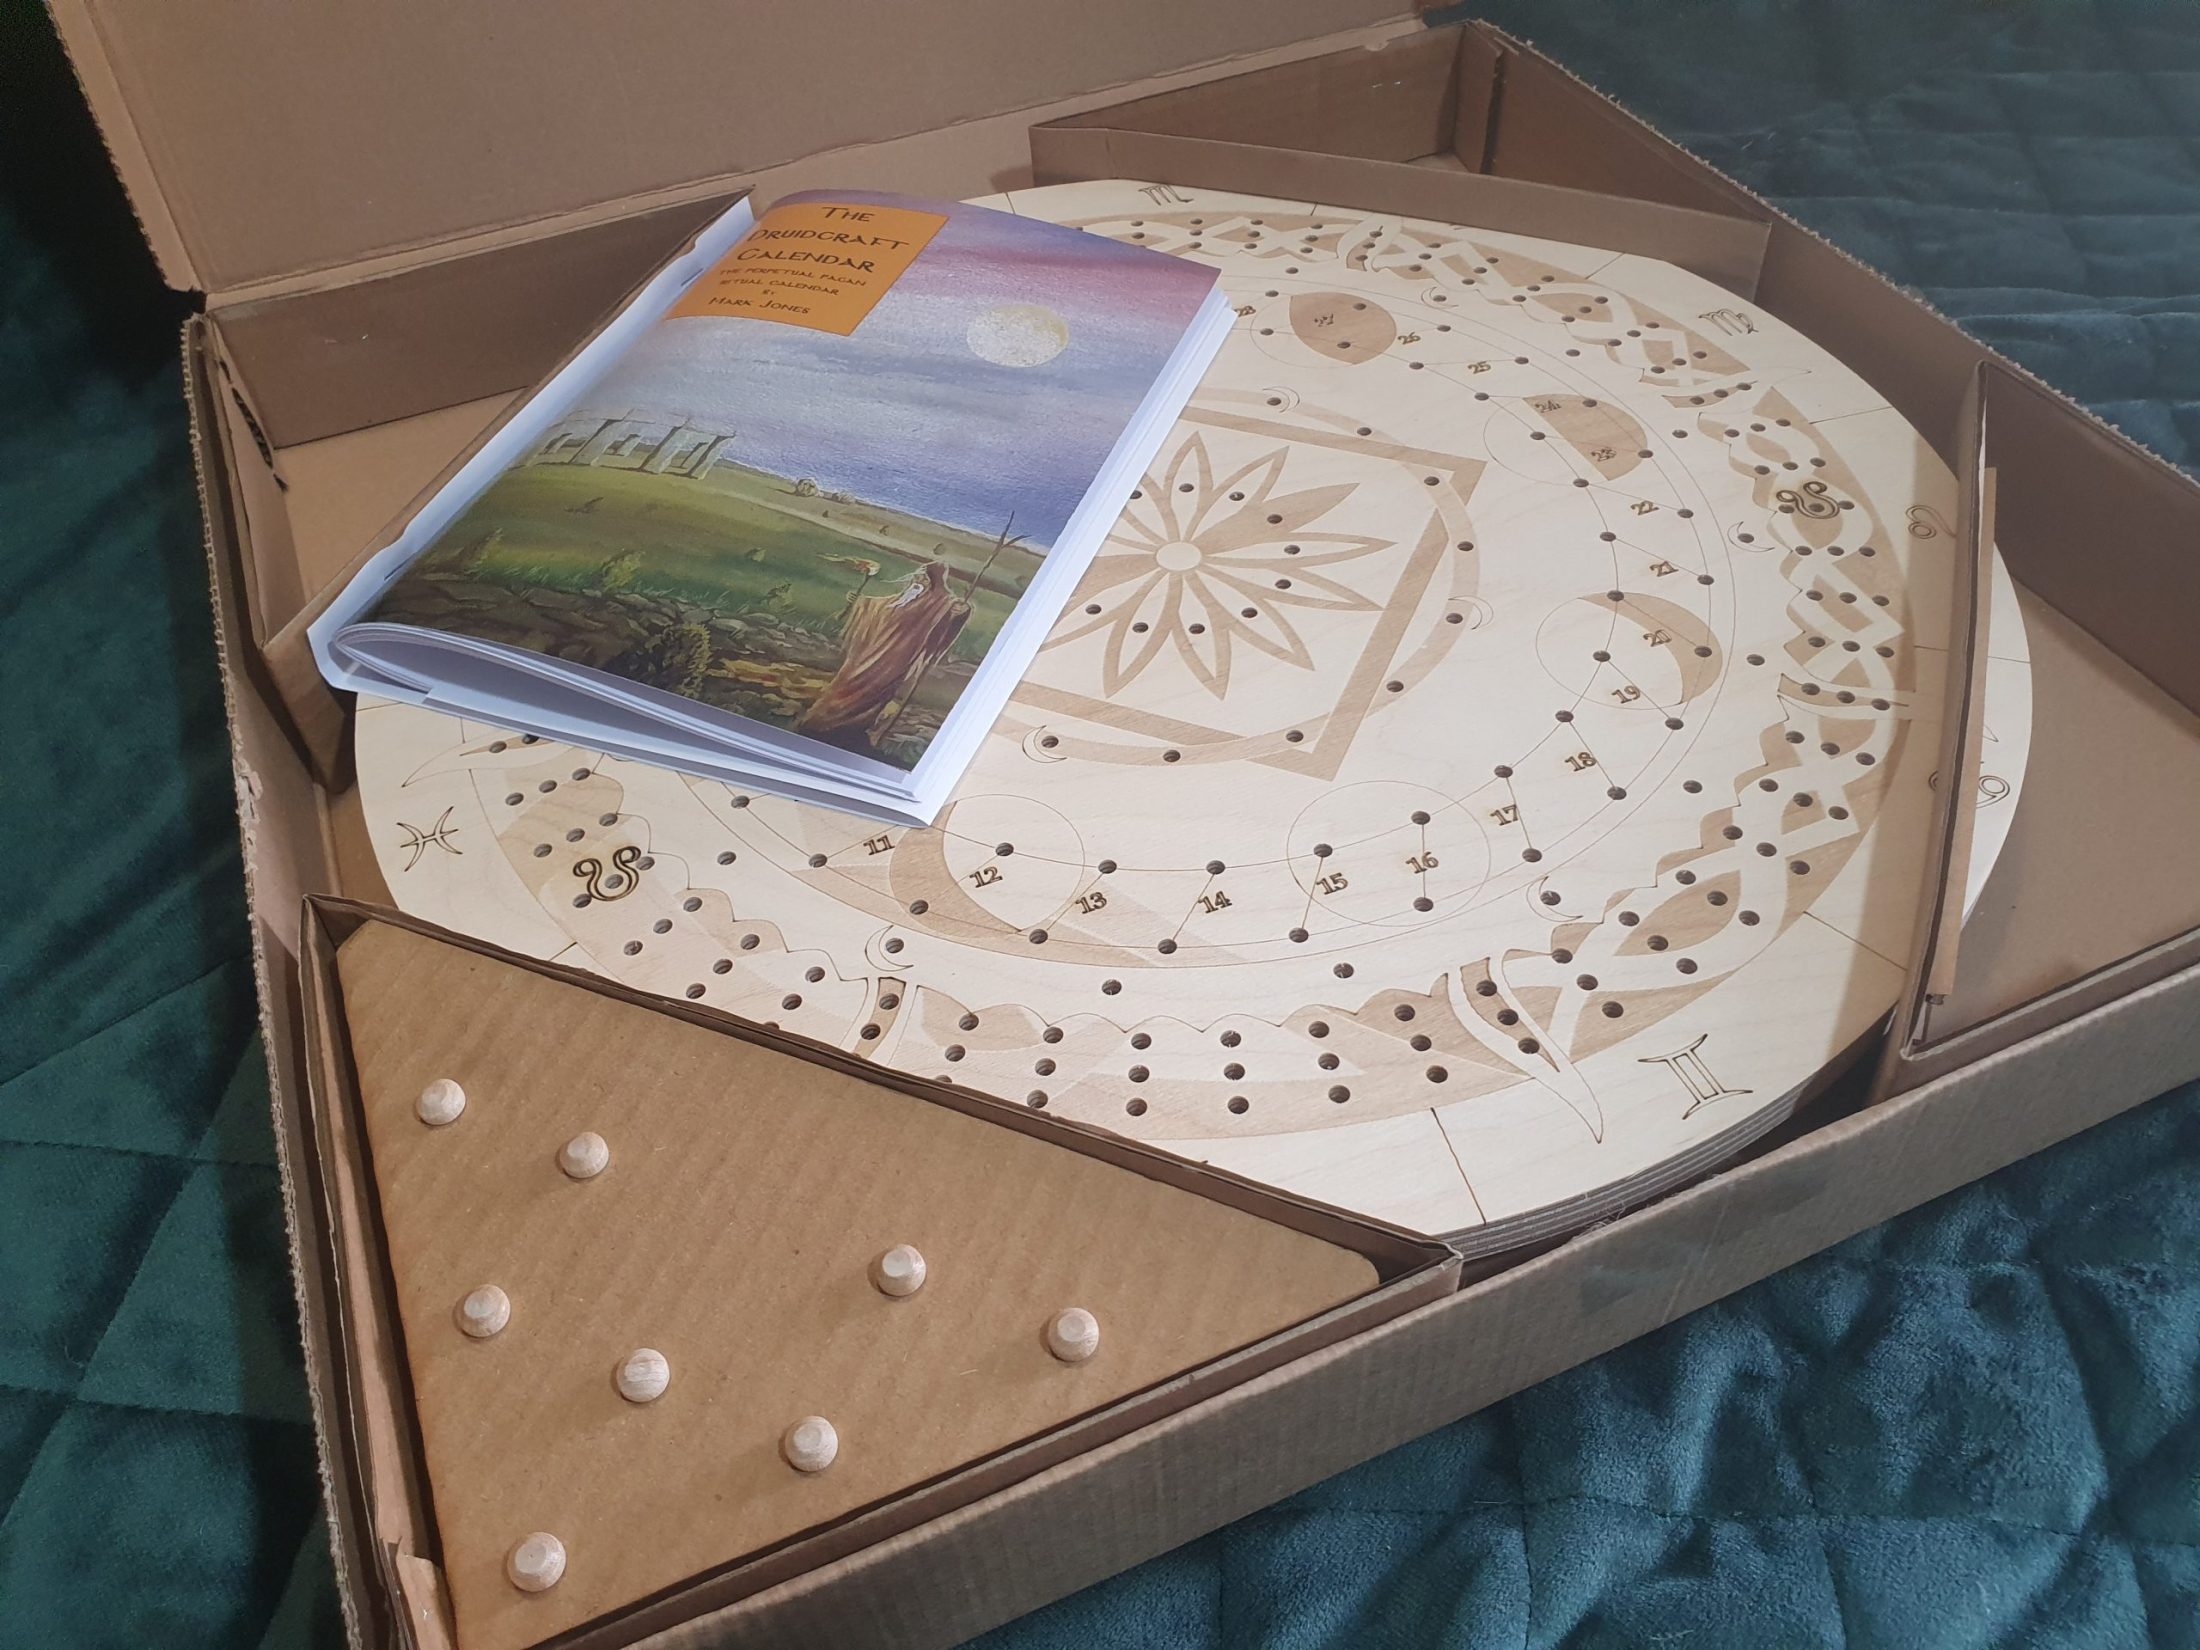 Inside the Druidcraft Calendar box